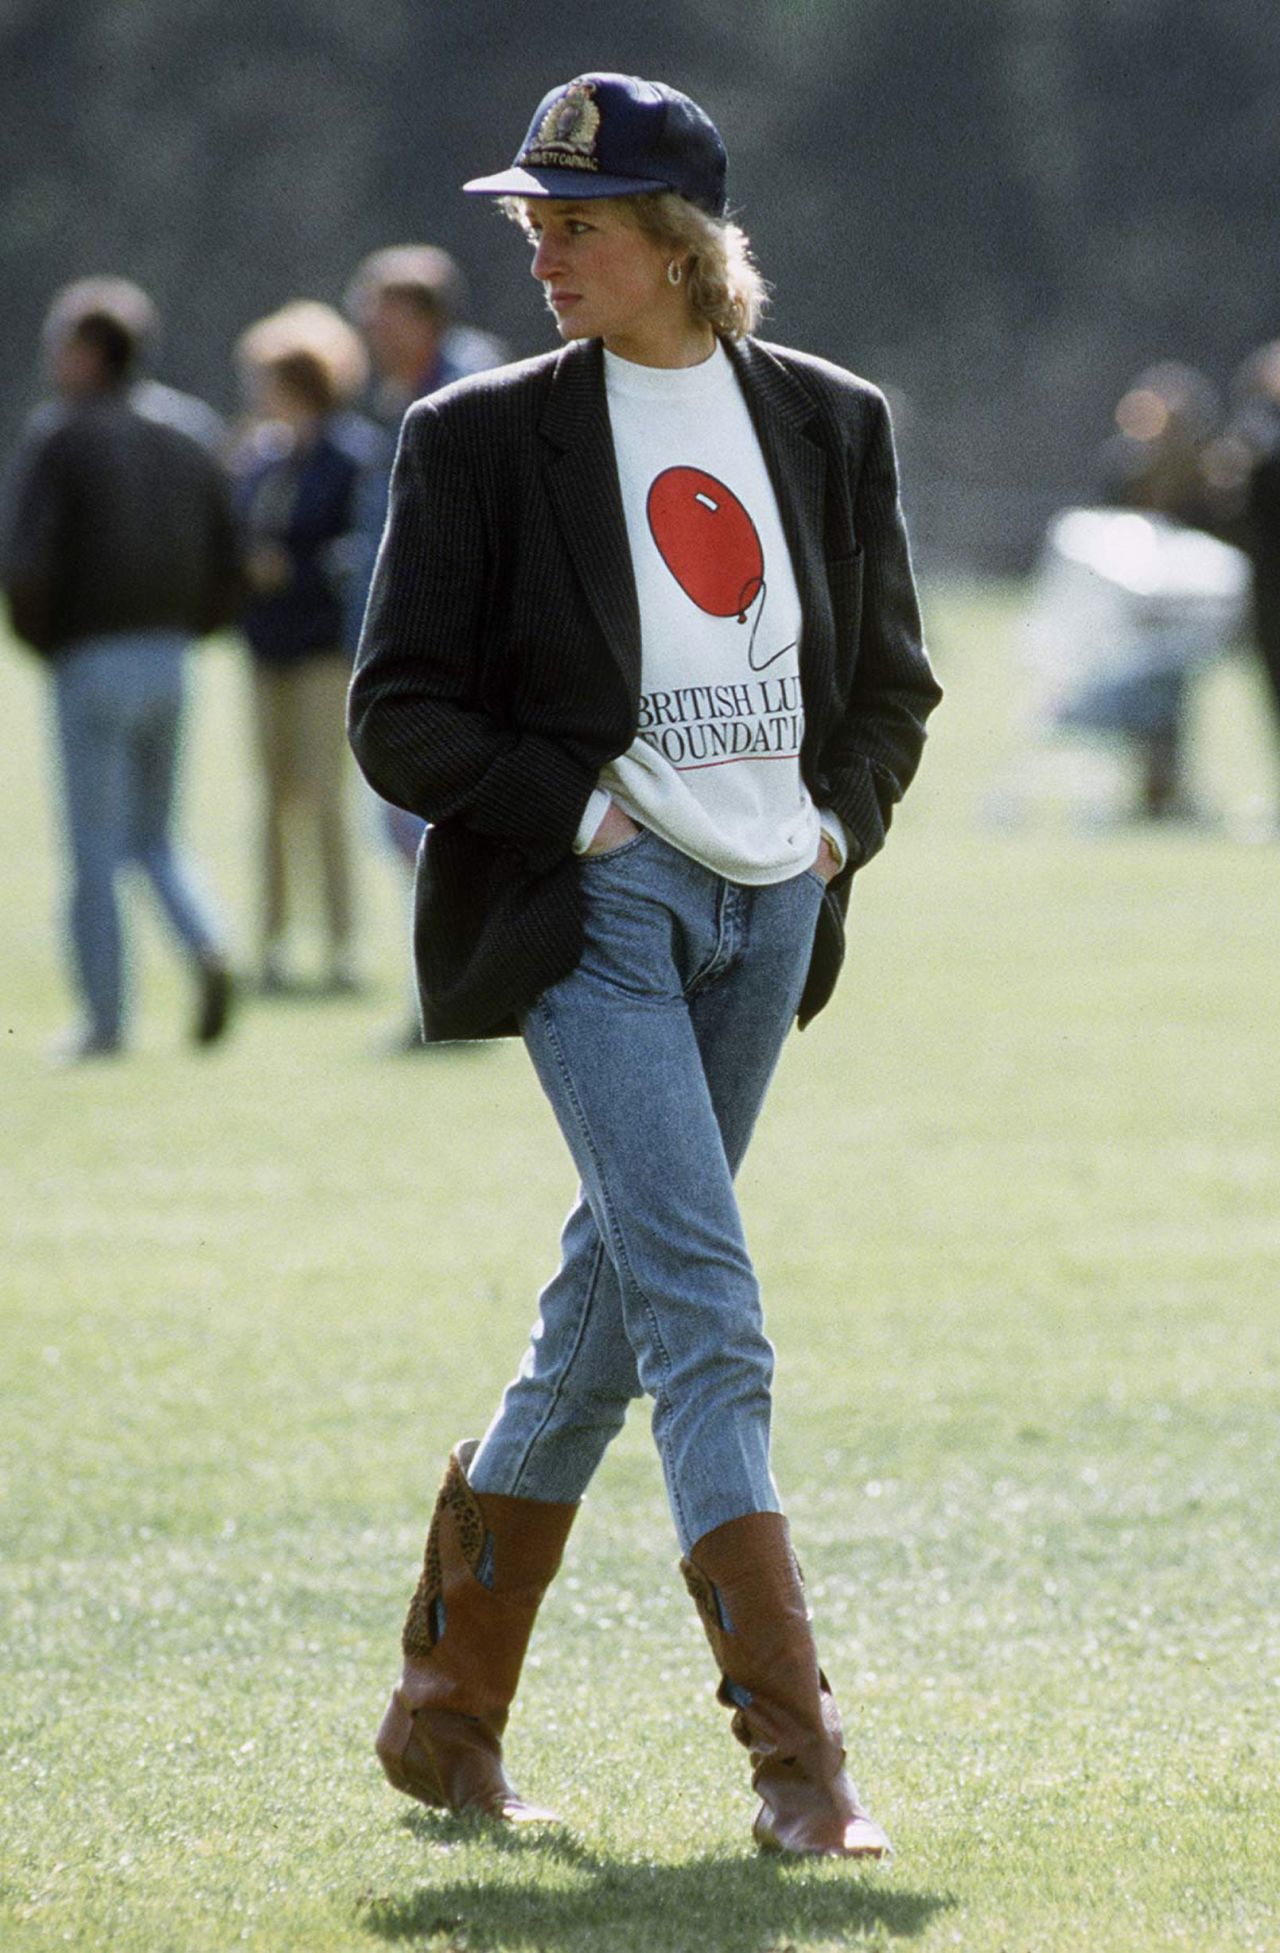 Princess Diana wearing a British Lung Foundation charity sweatshirt to a polo match.